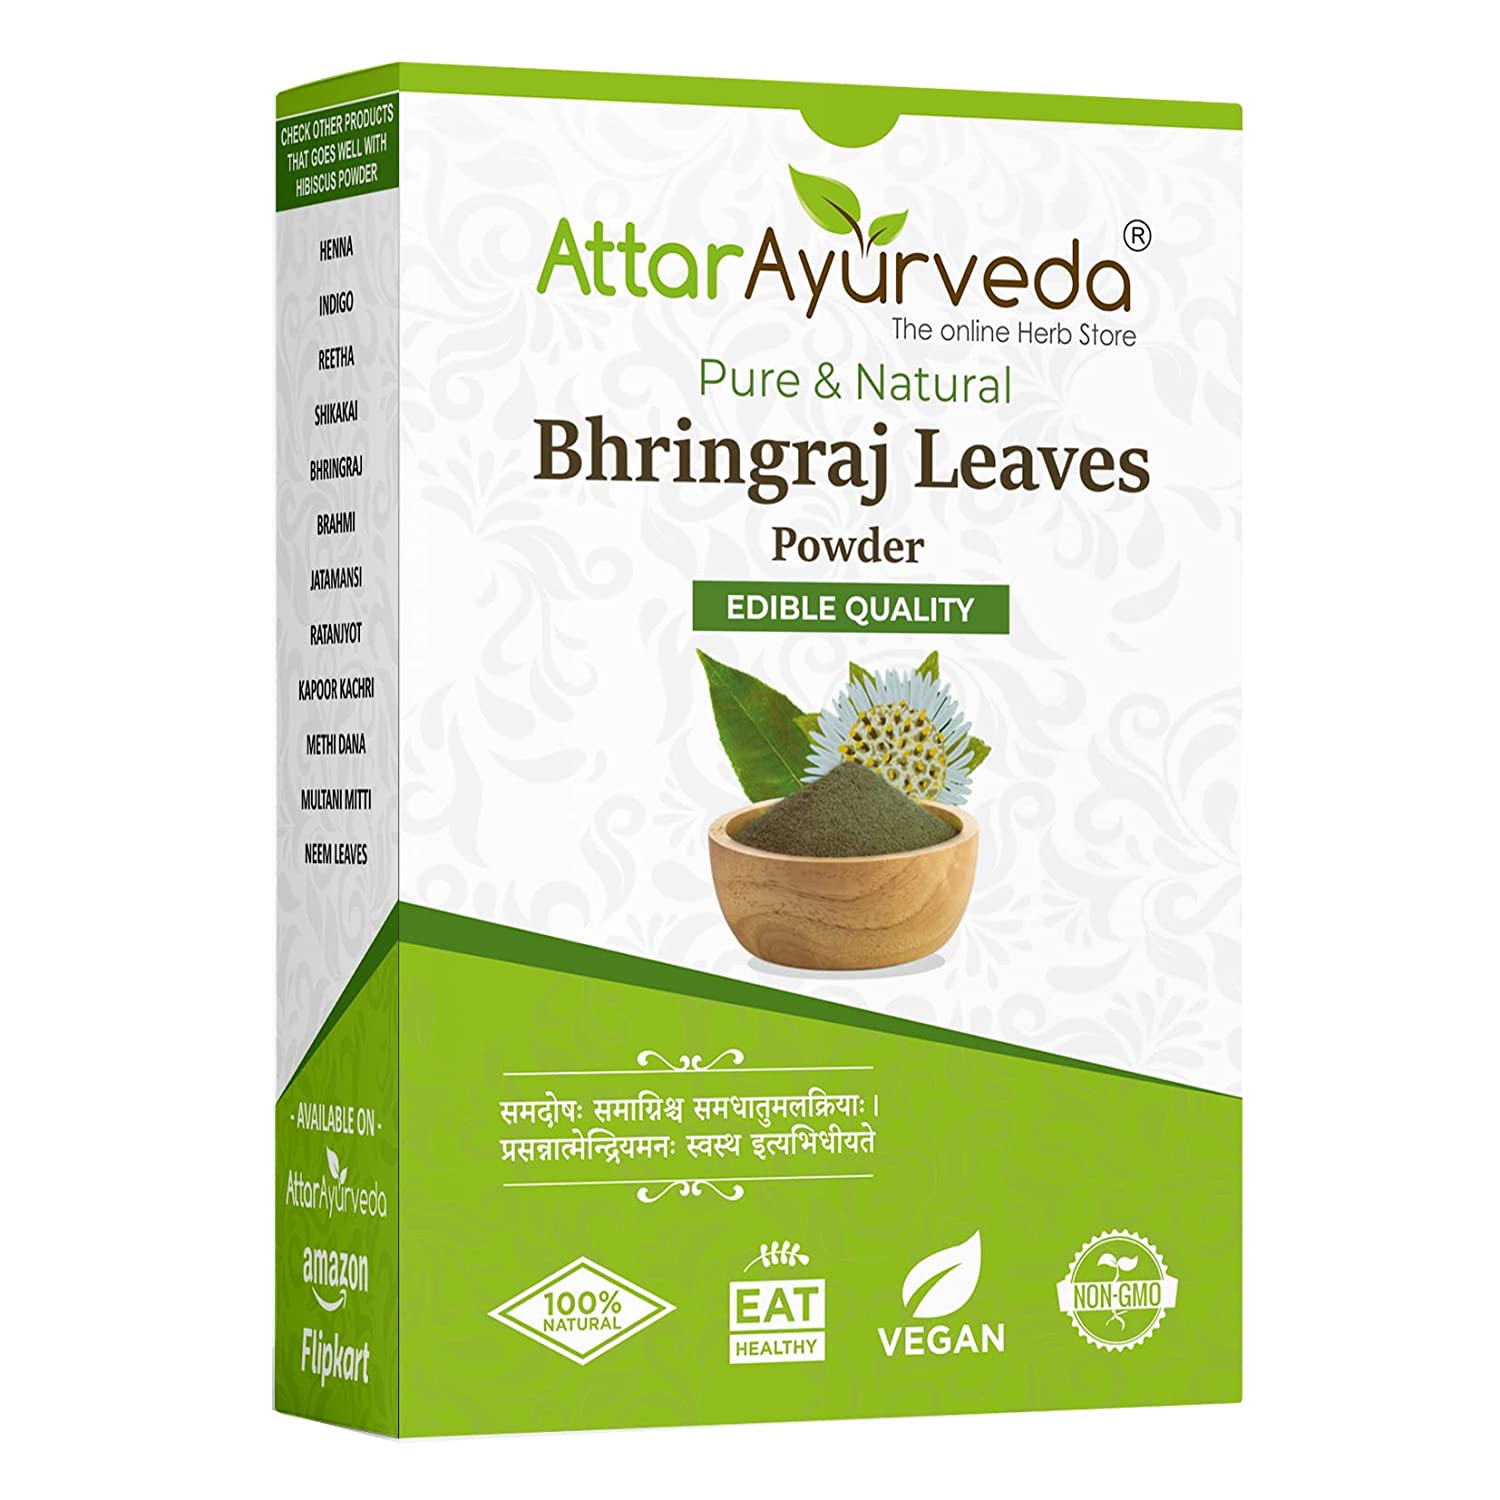 Attar Ayurveda bhringraj powder